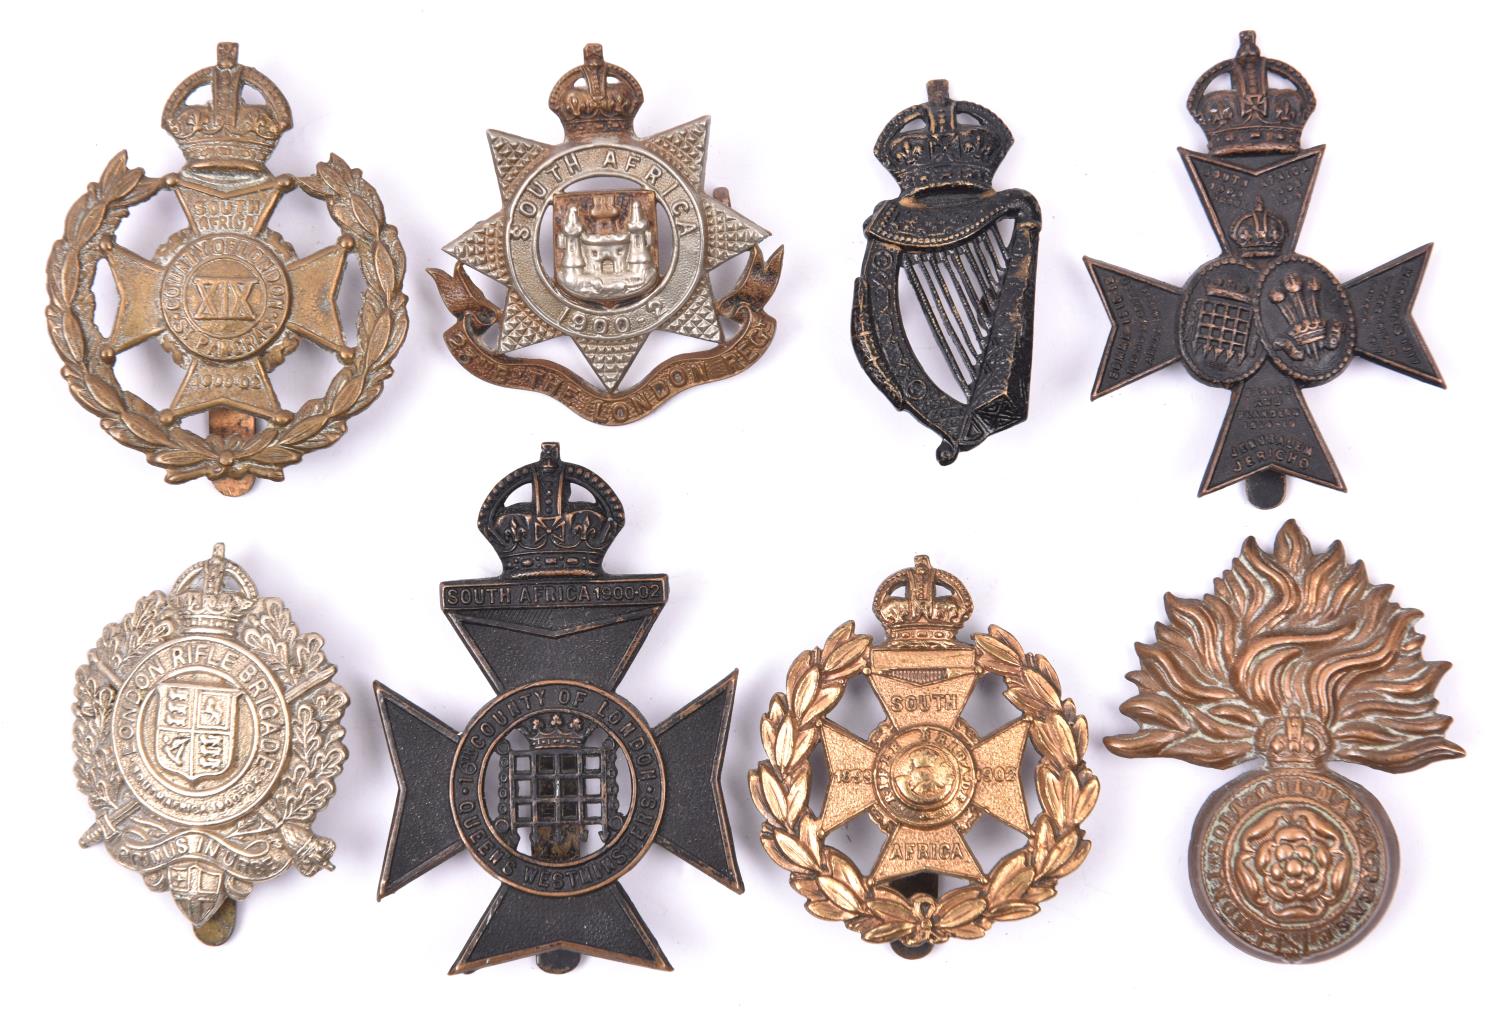 8 London Regiment cap badges: Royal Fusiliers (1st to 4th Bns), pre 1920 5th (London Rifle Brigade),